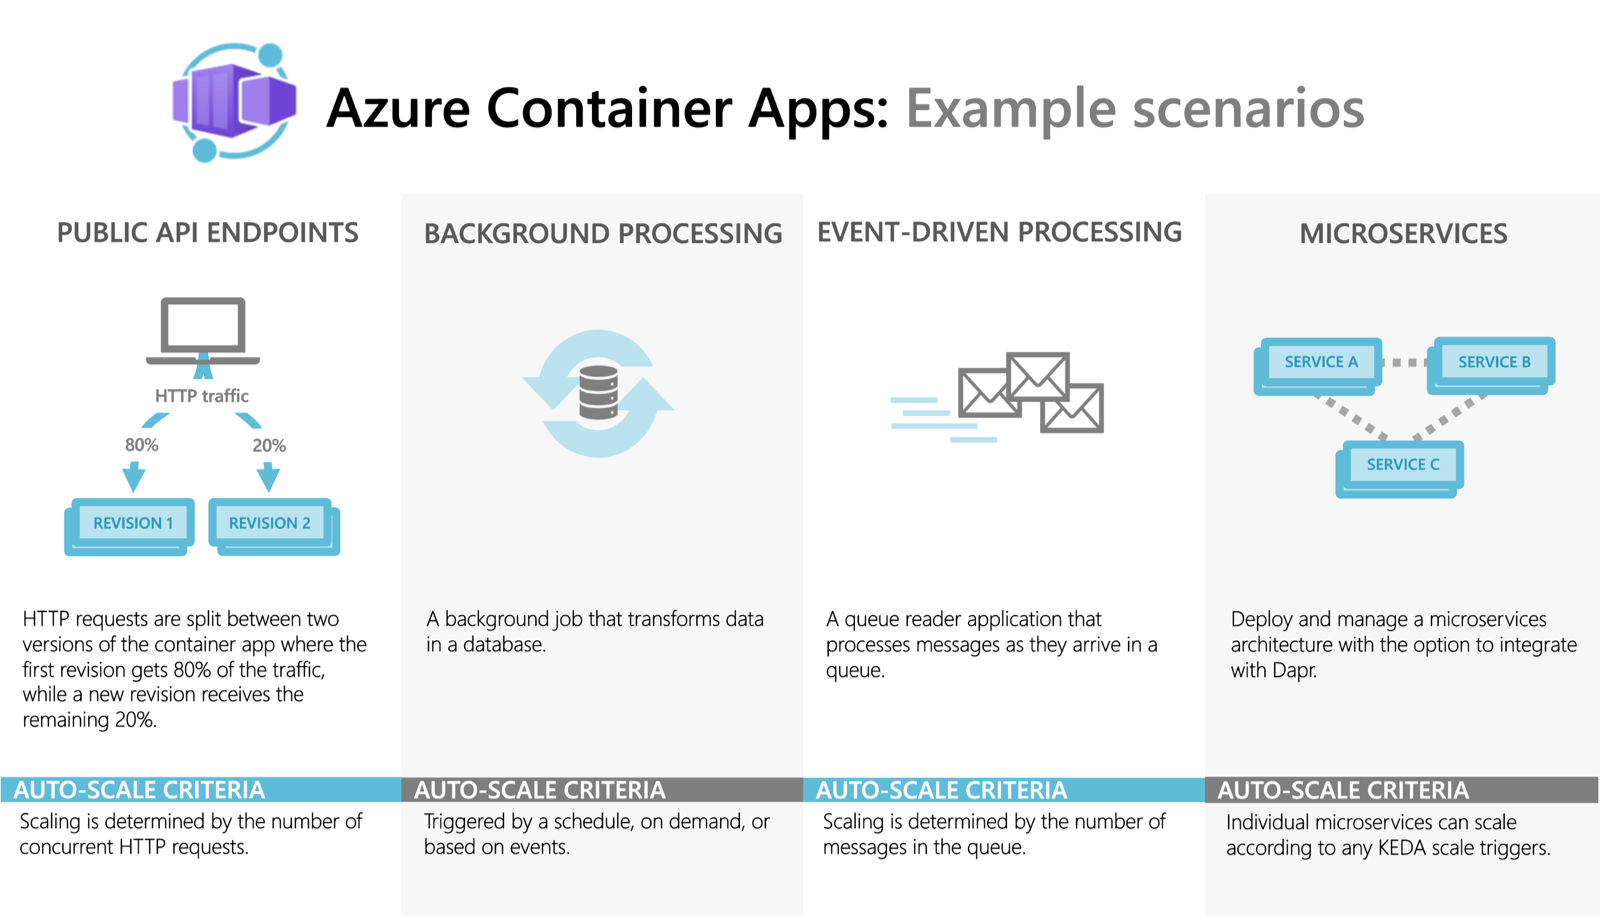 Example scenarios for Azure Container Apps.